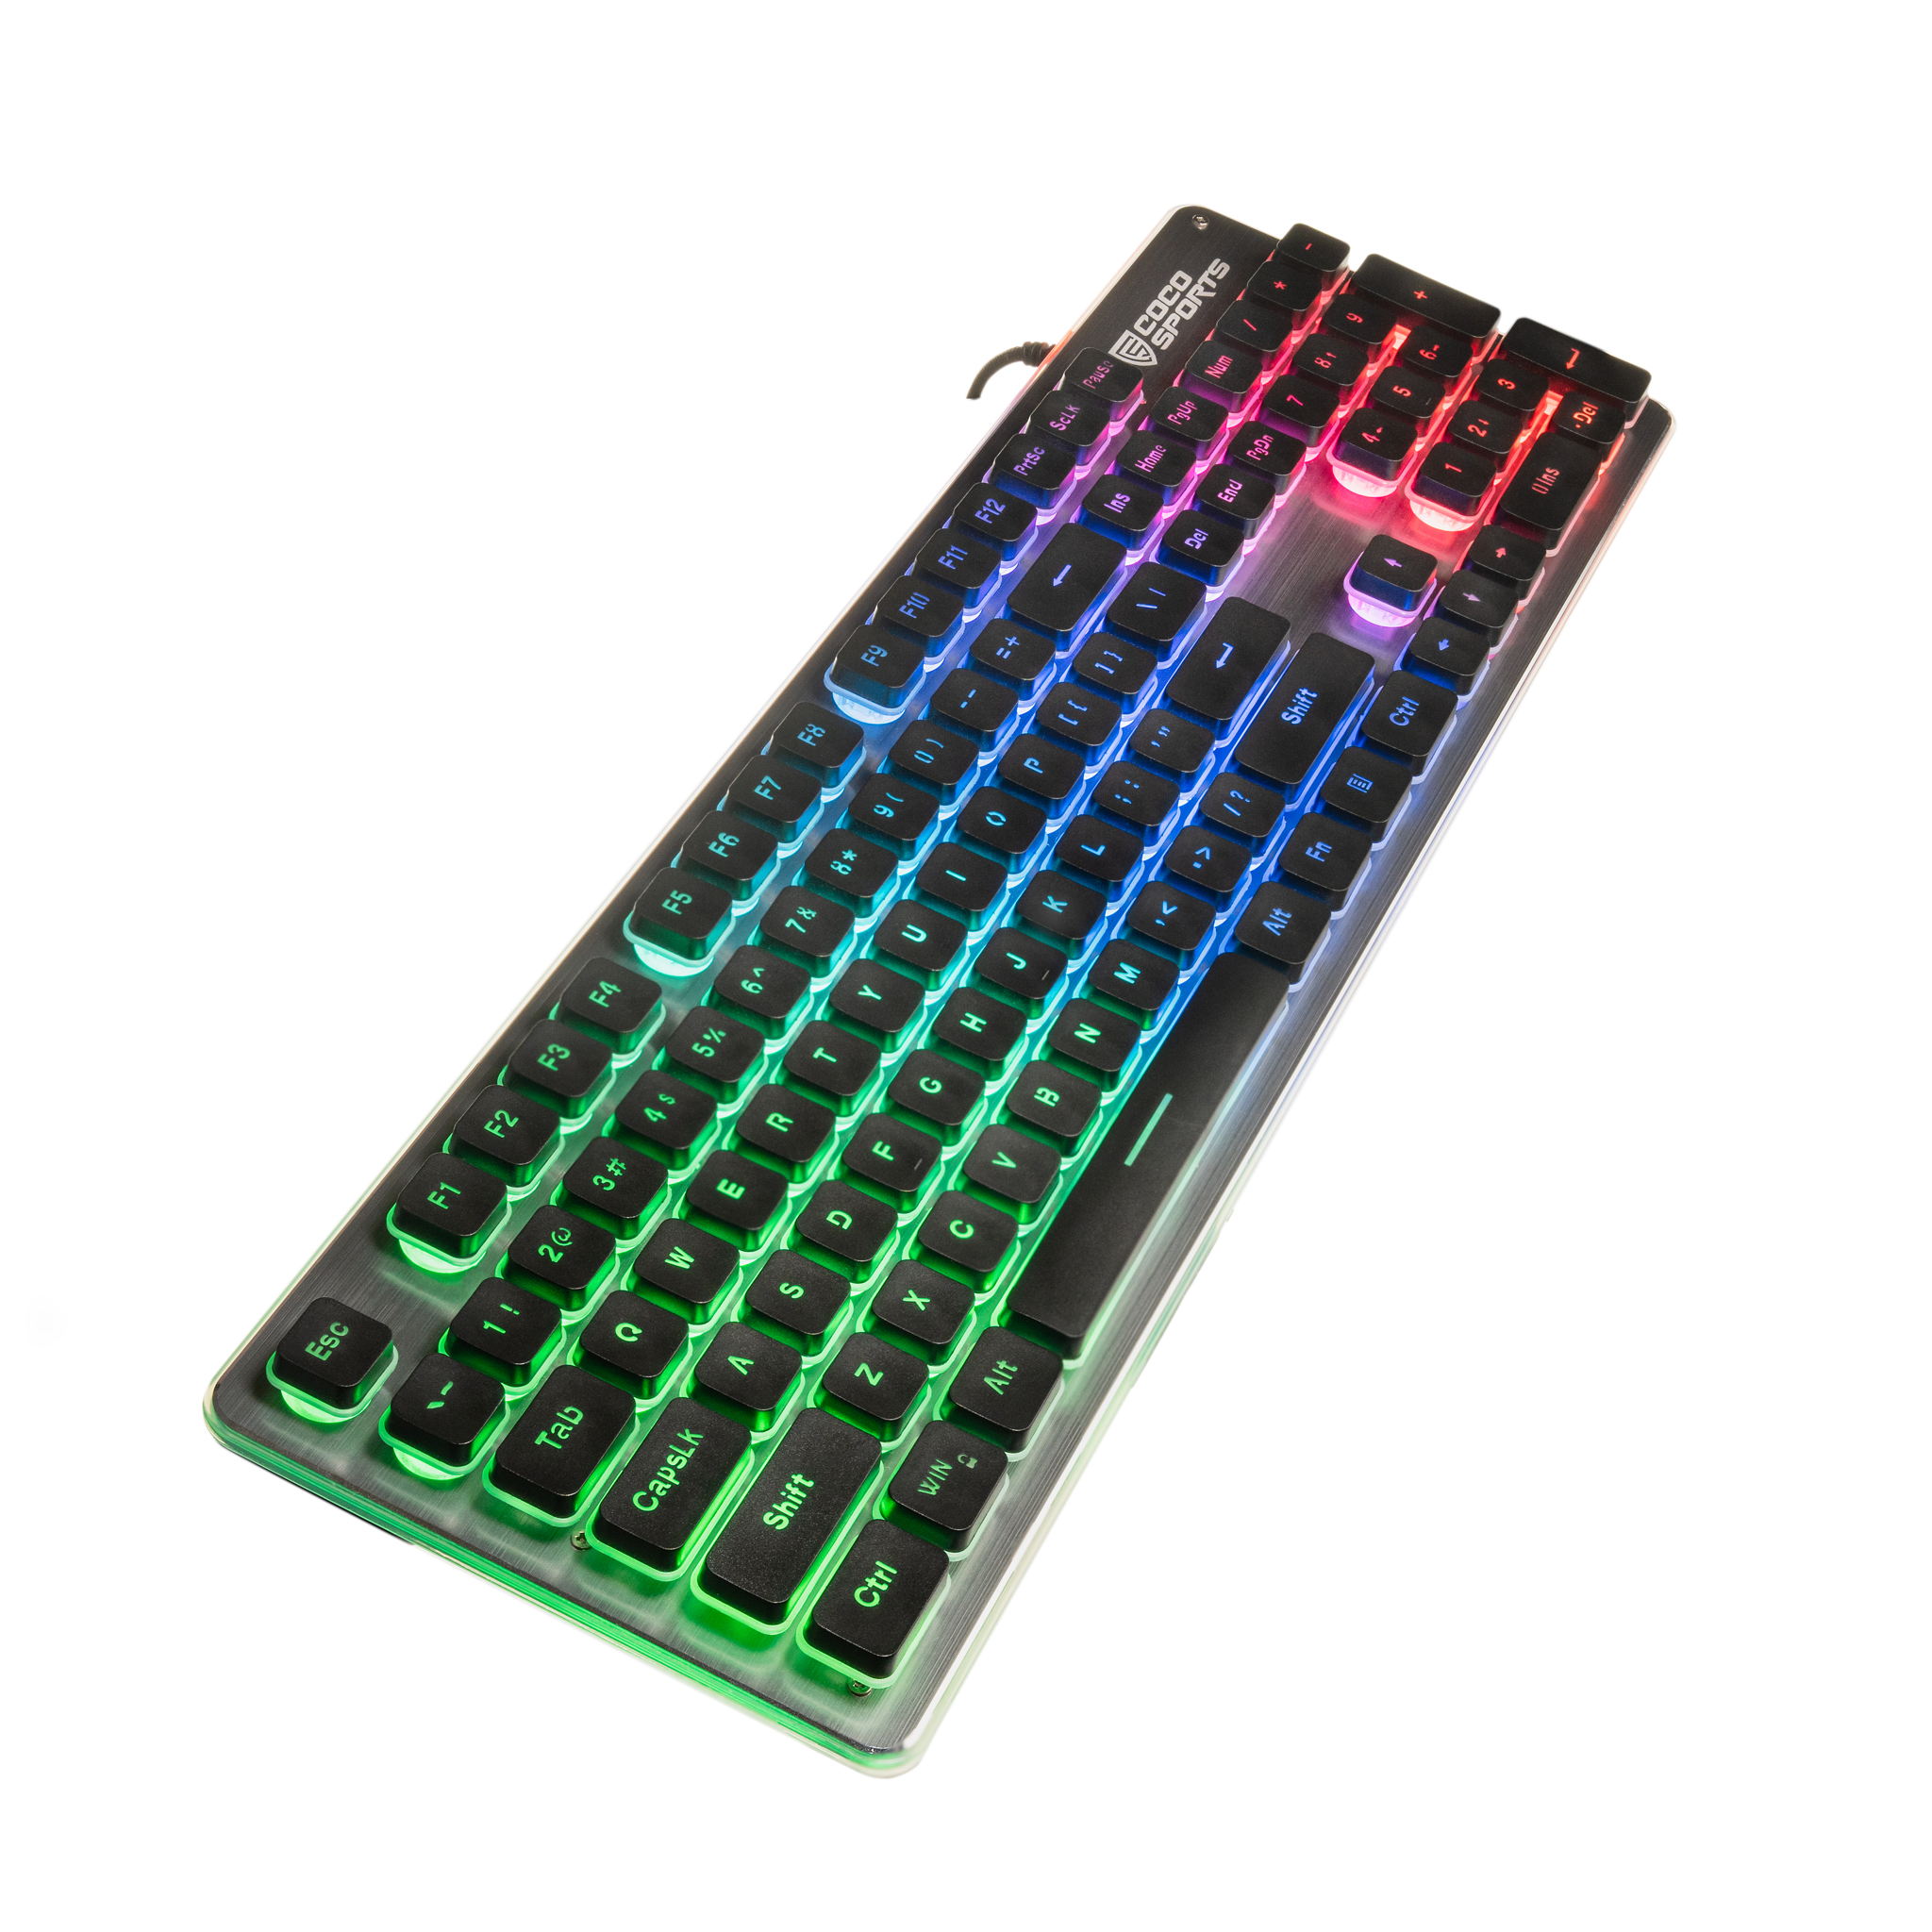 Black keyboard with rainbow LED backlight on a white background